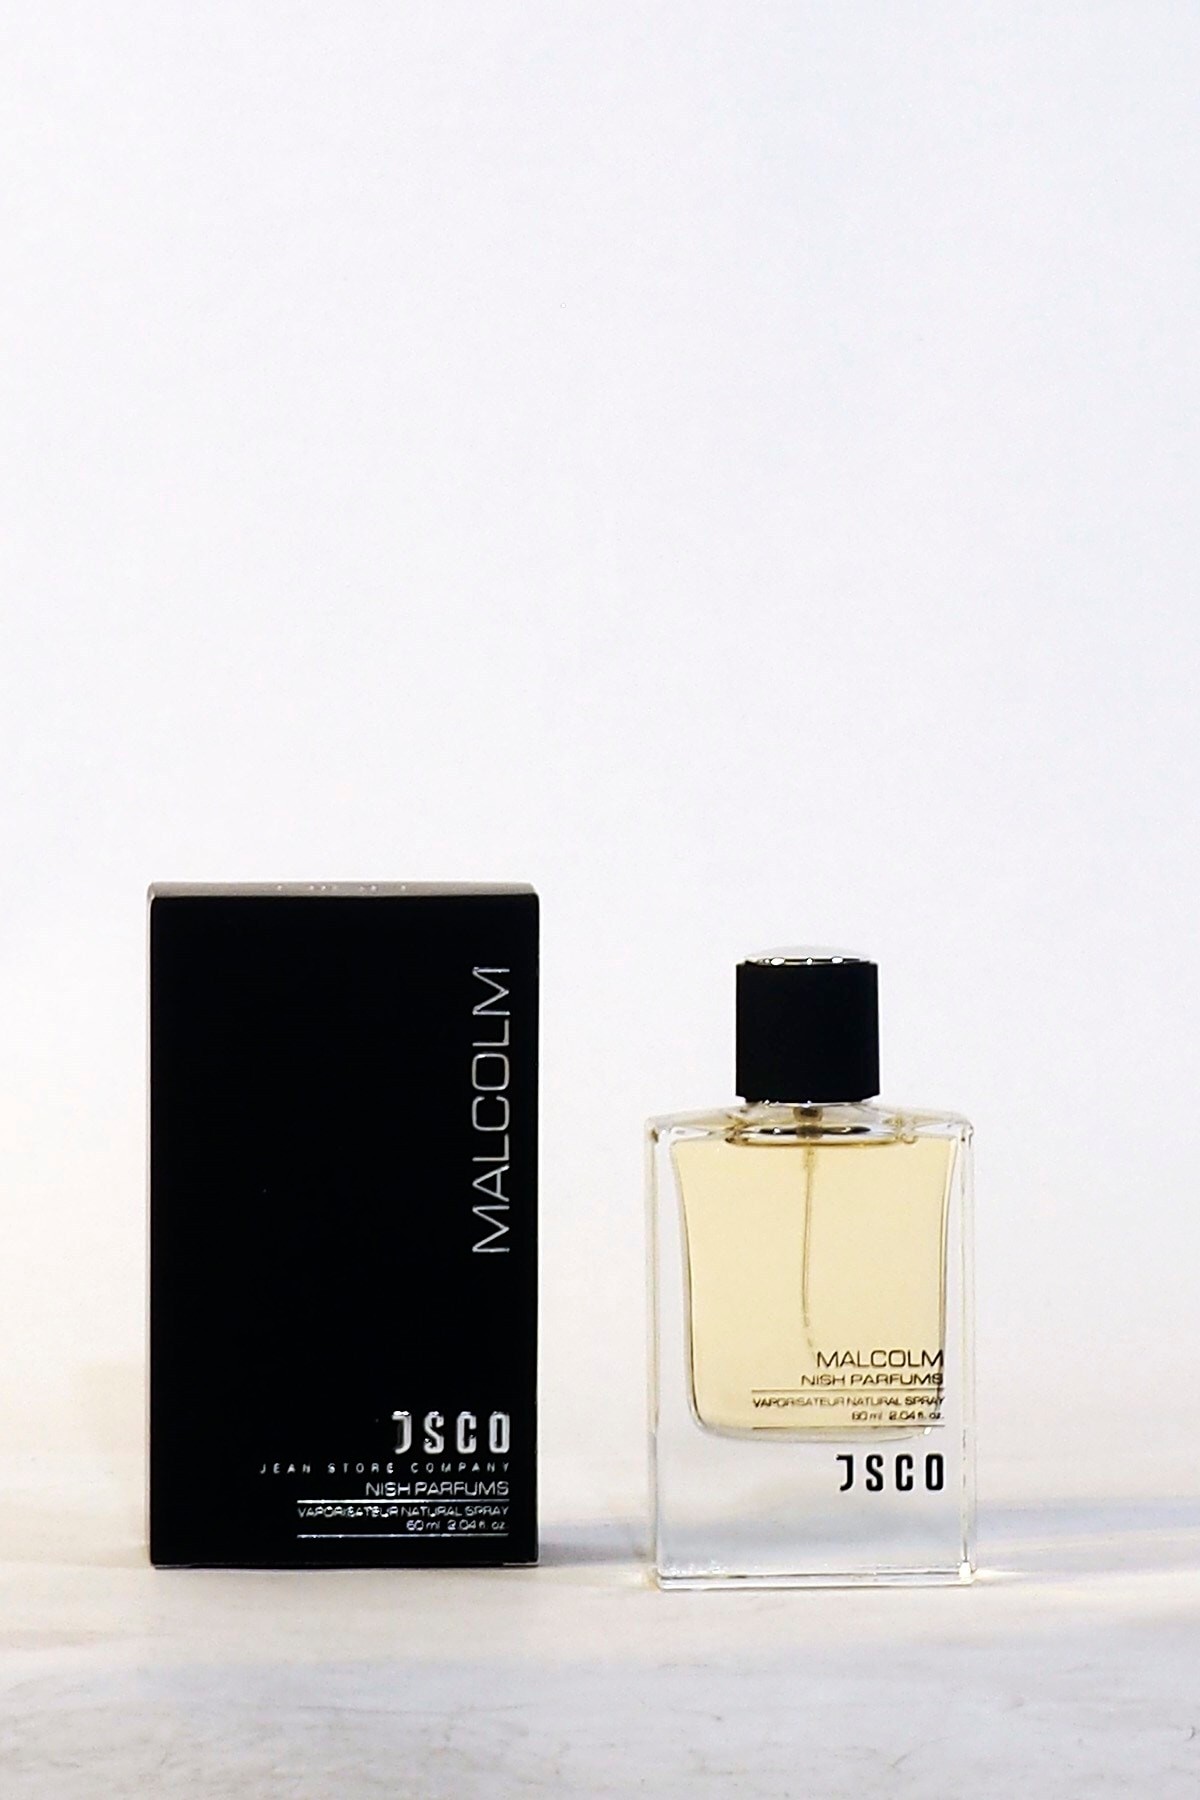 JSCO - MALCOLM Erkek Parfüm